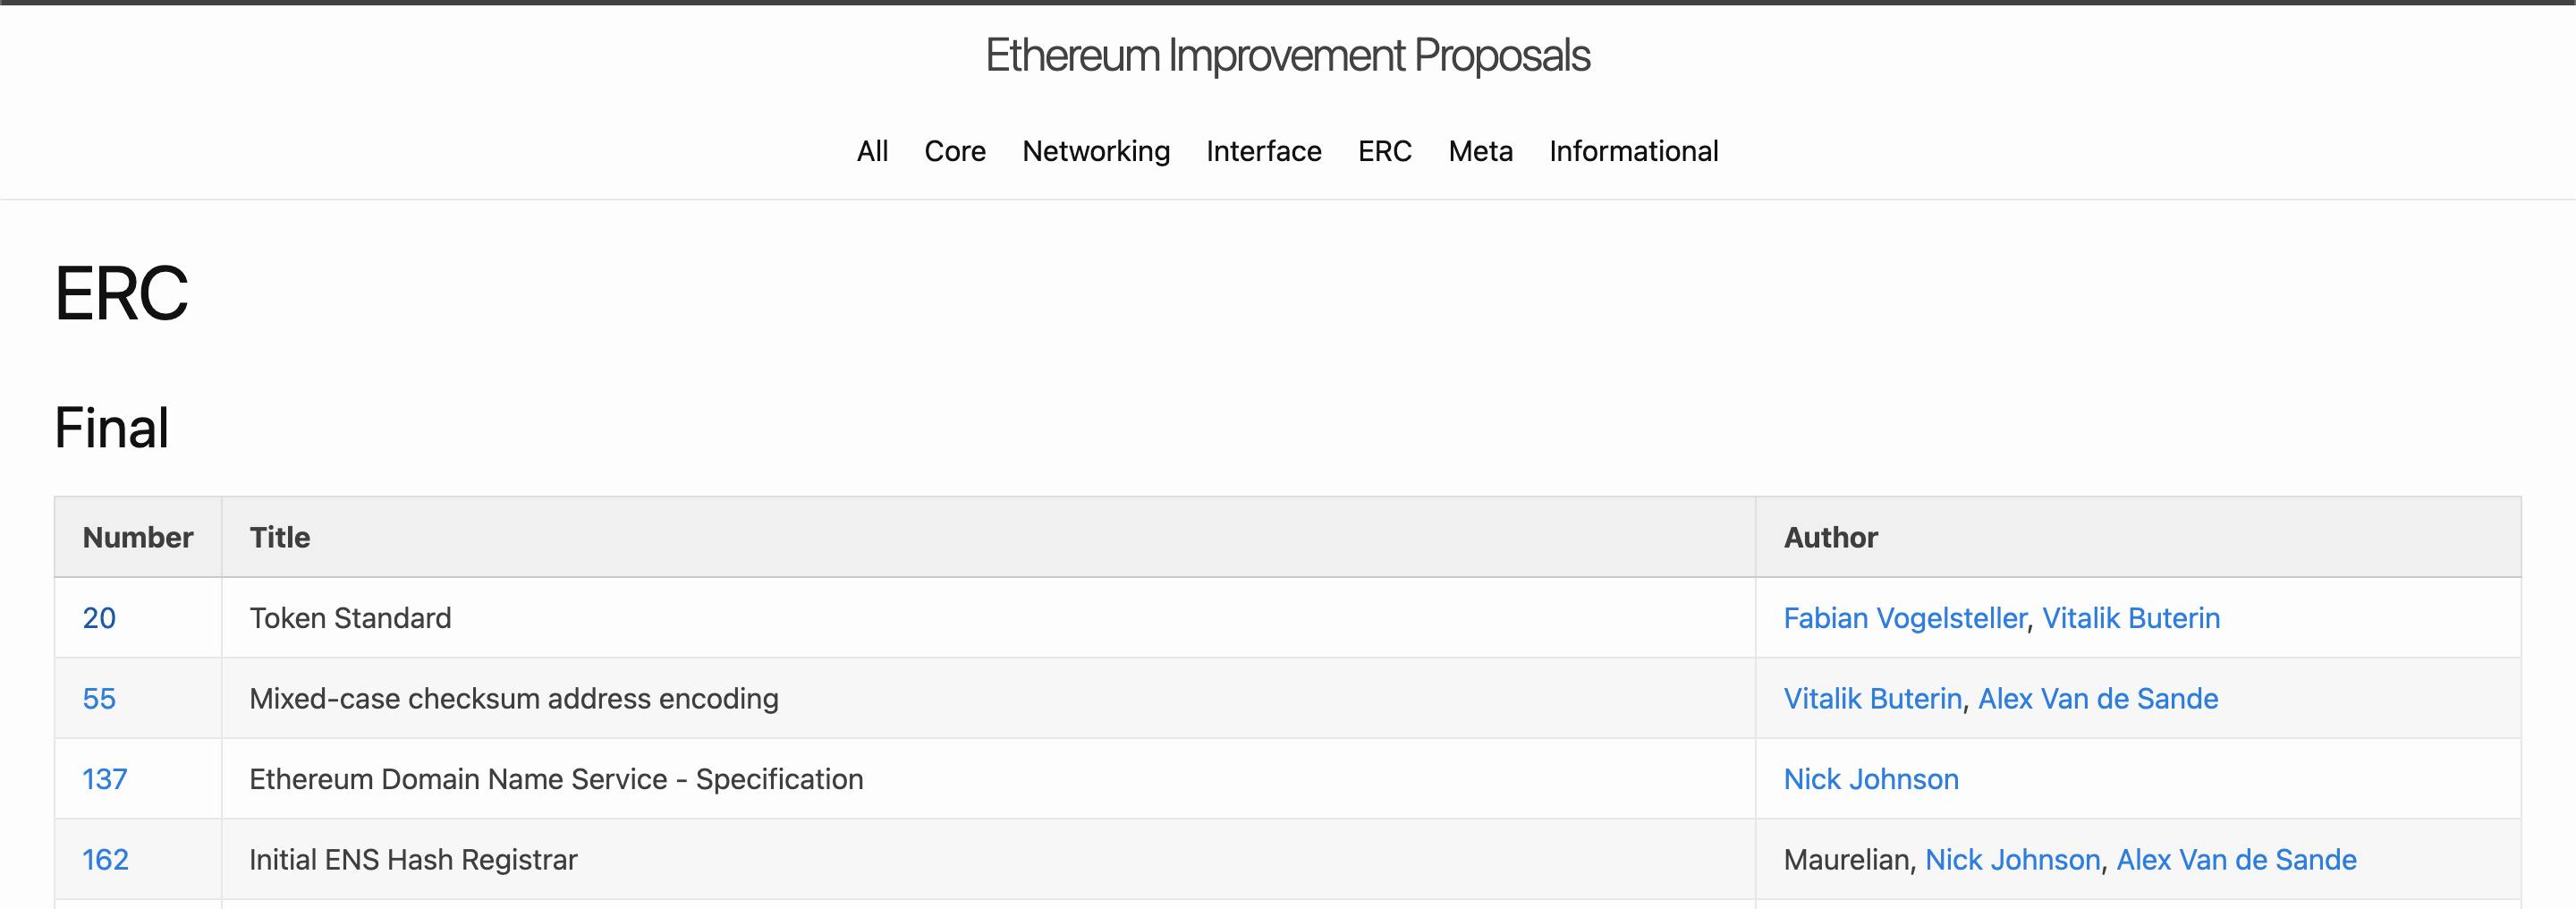 Ethereum Improvement Proposals
